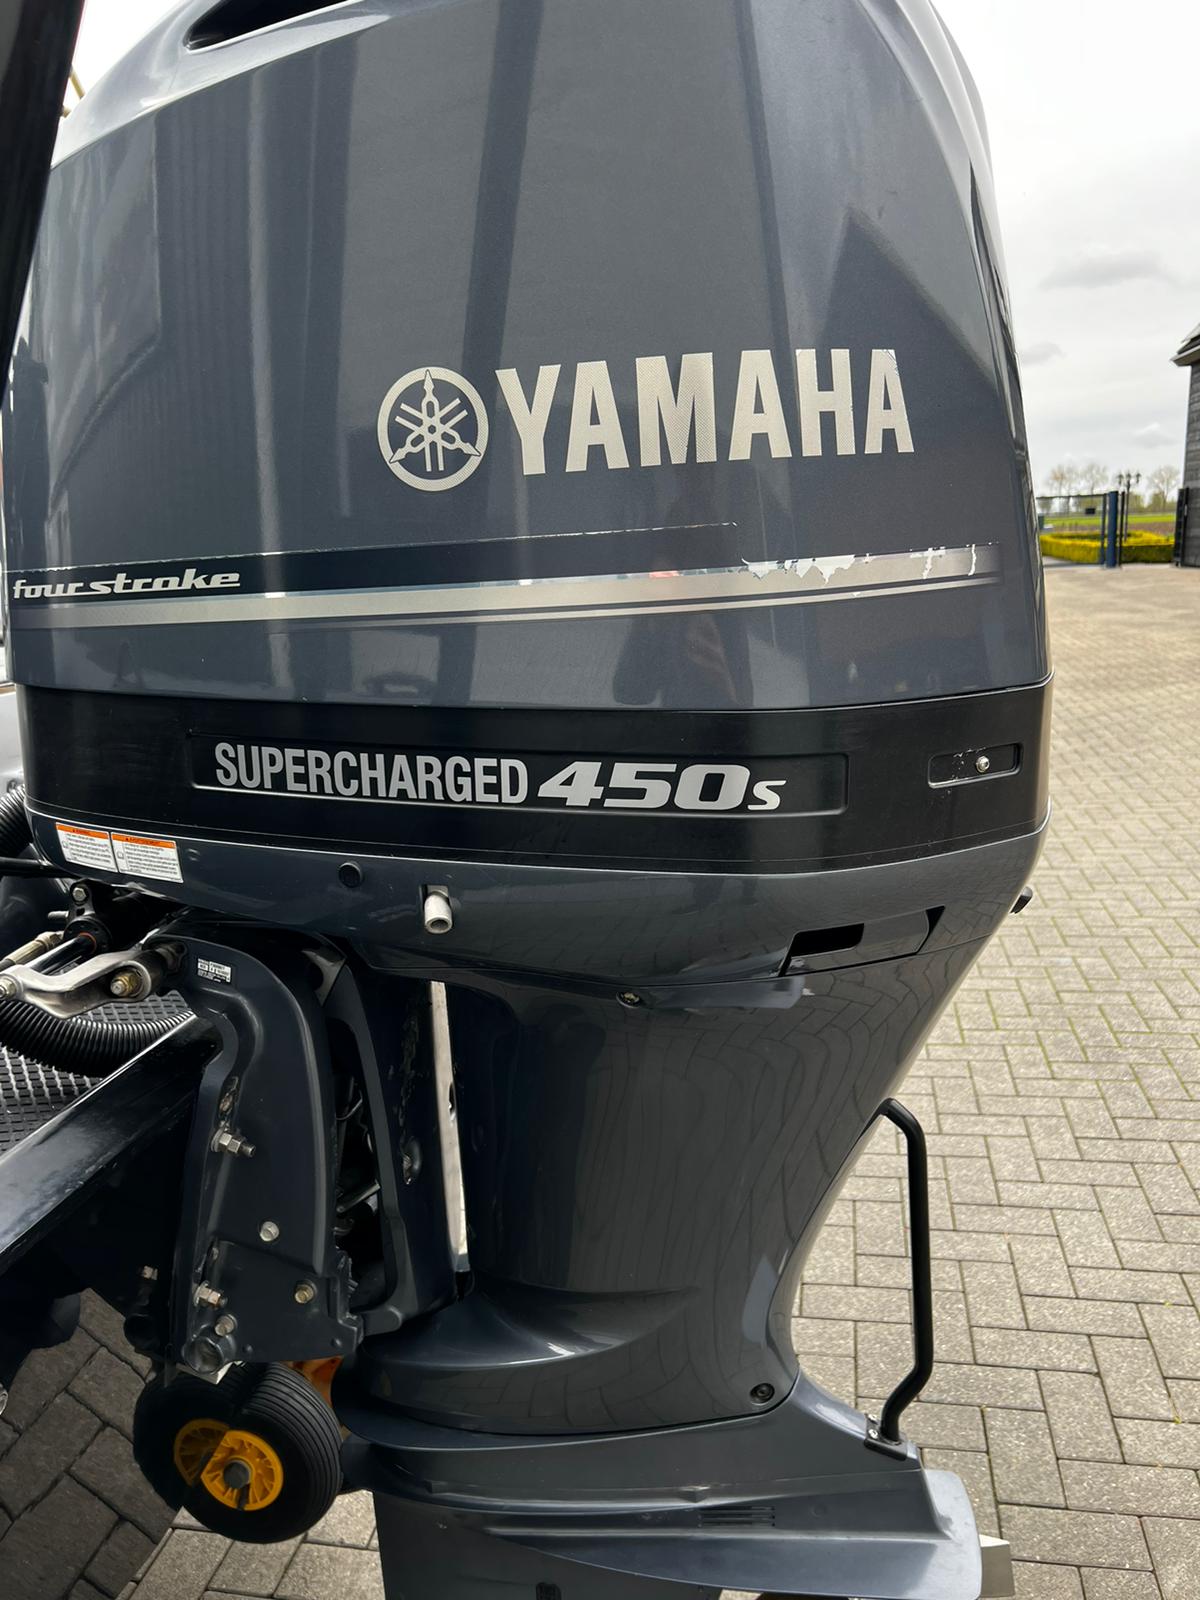 Revolt 860 Yamaha 450 supercharged